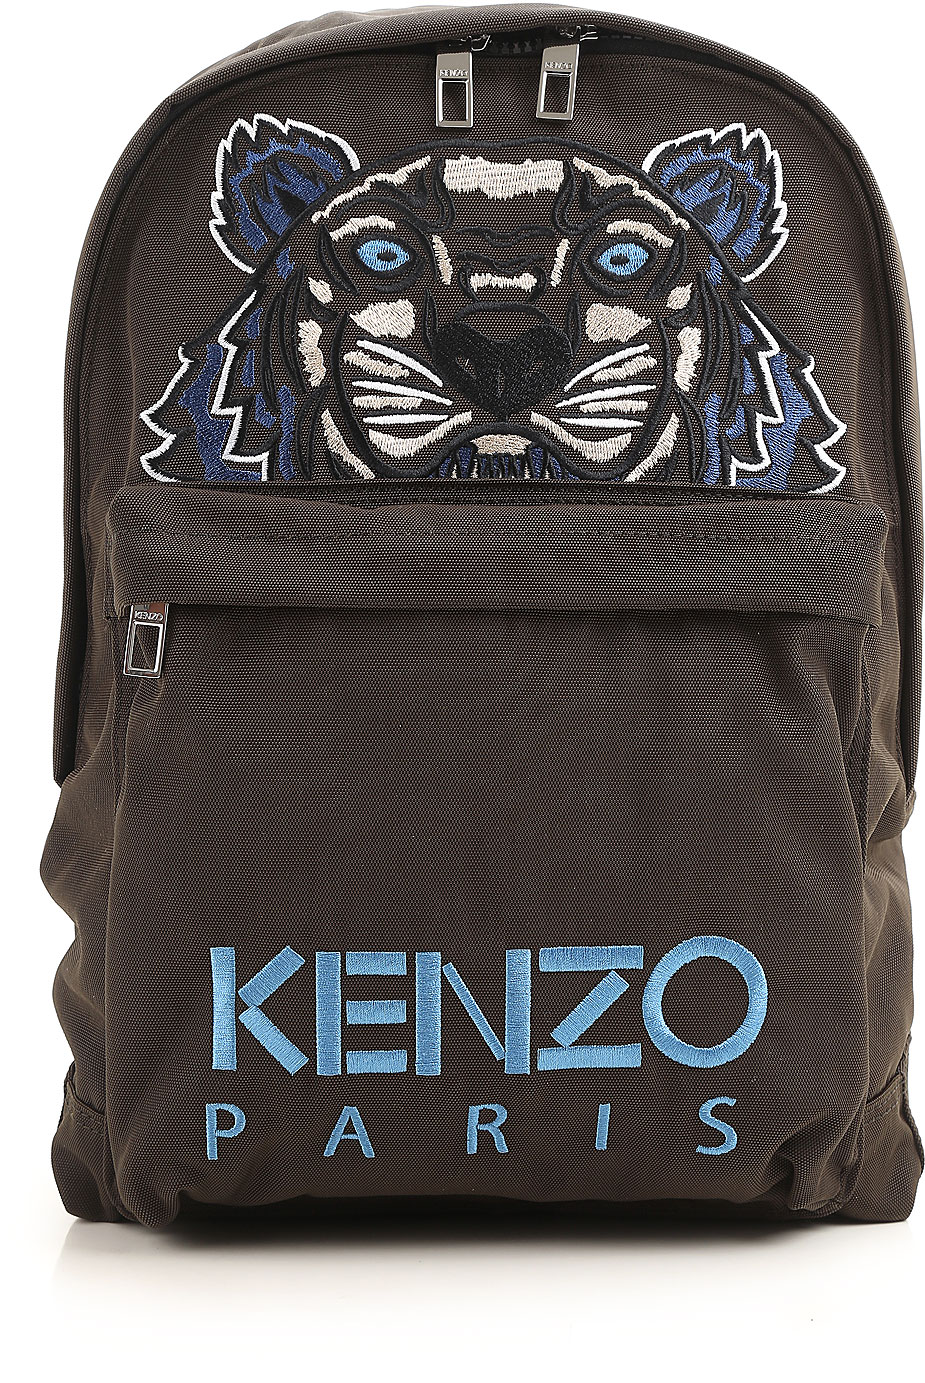 Kenzo Takada Handbags Online | semashow.com